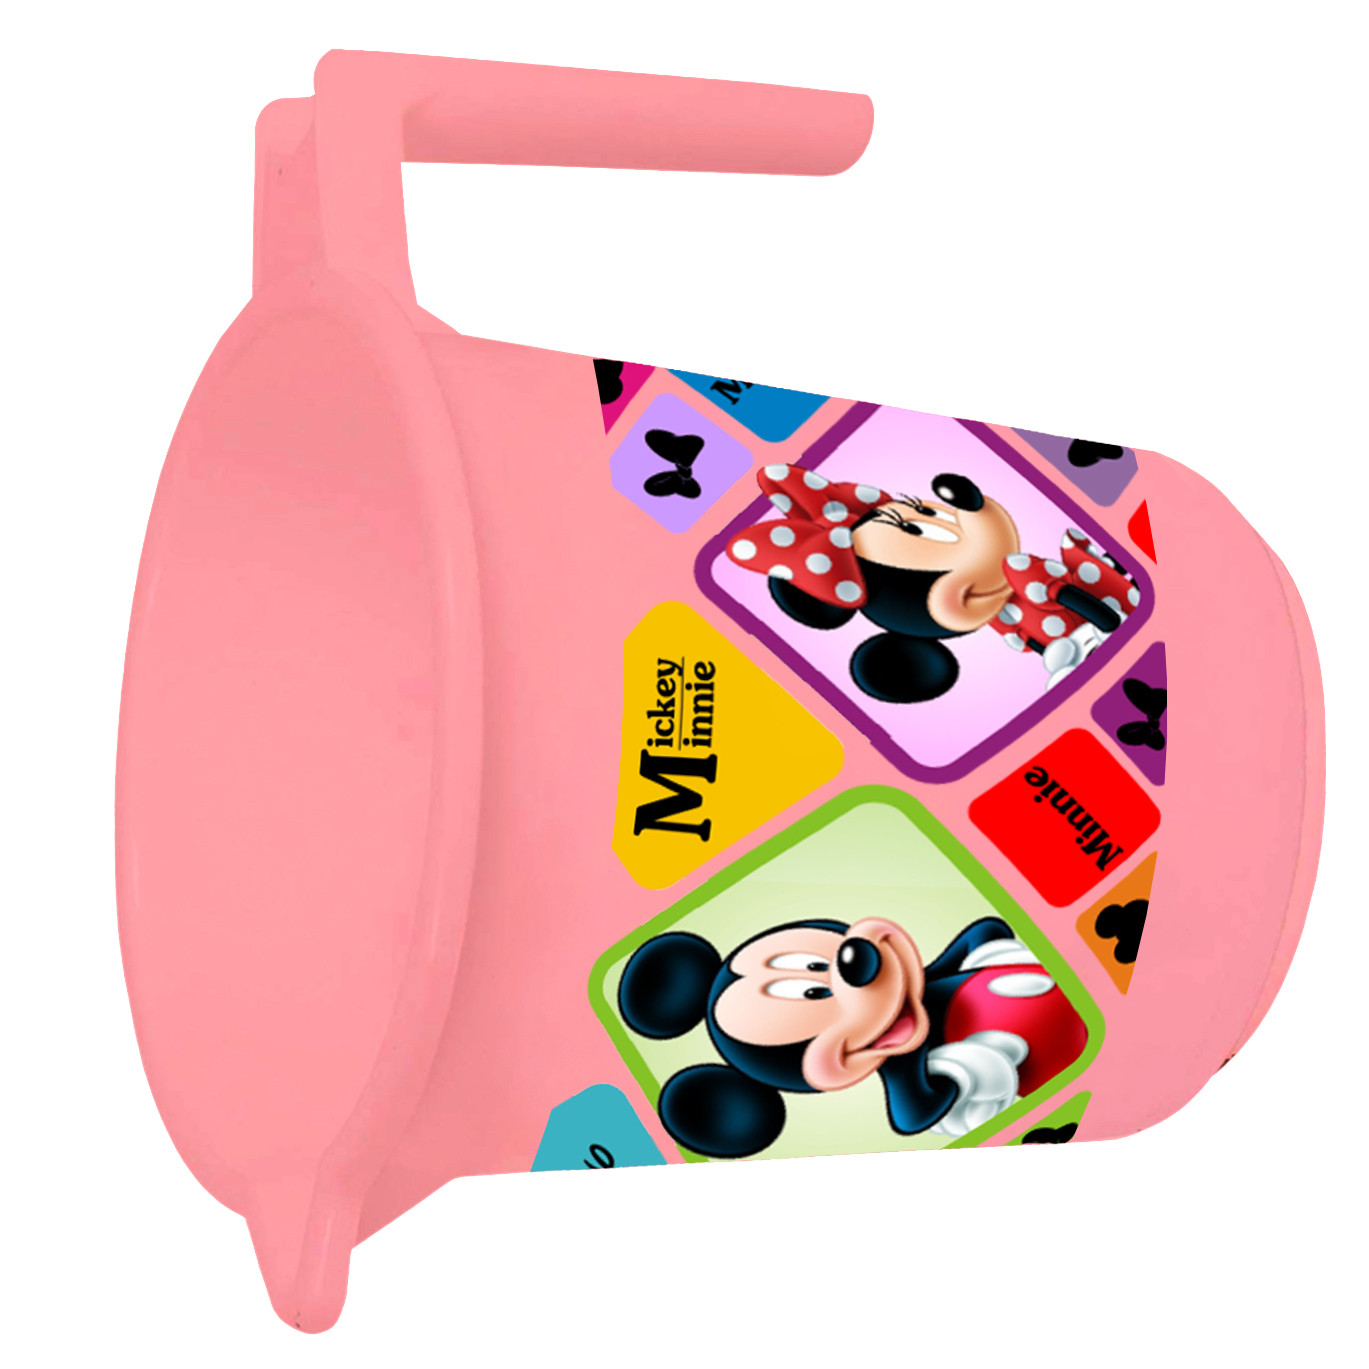 Kuber Industries Disney Mickey Minnie Print 6 Pieces Unbreakable Strong Plastic Bathroom Mug,500 ML (Pink & White) -HS_35_KUBMART17603